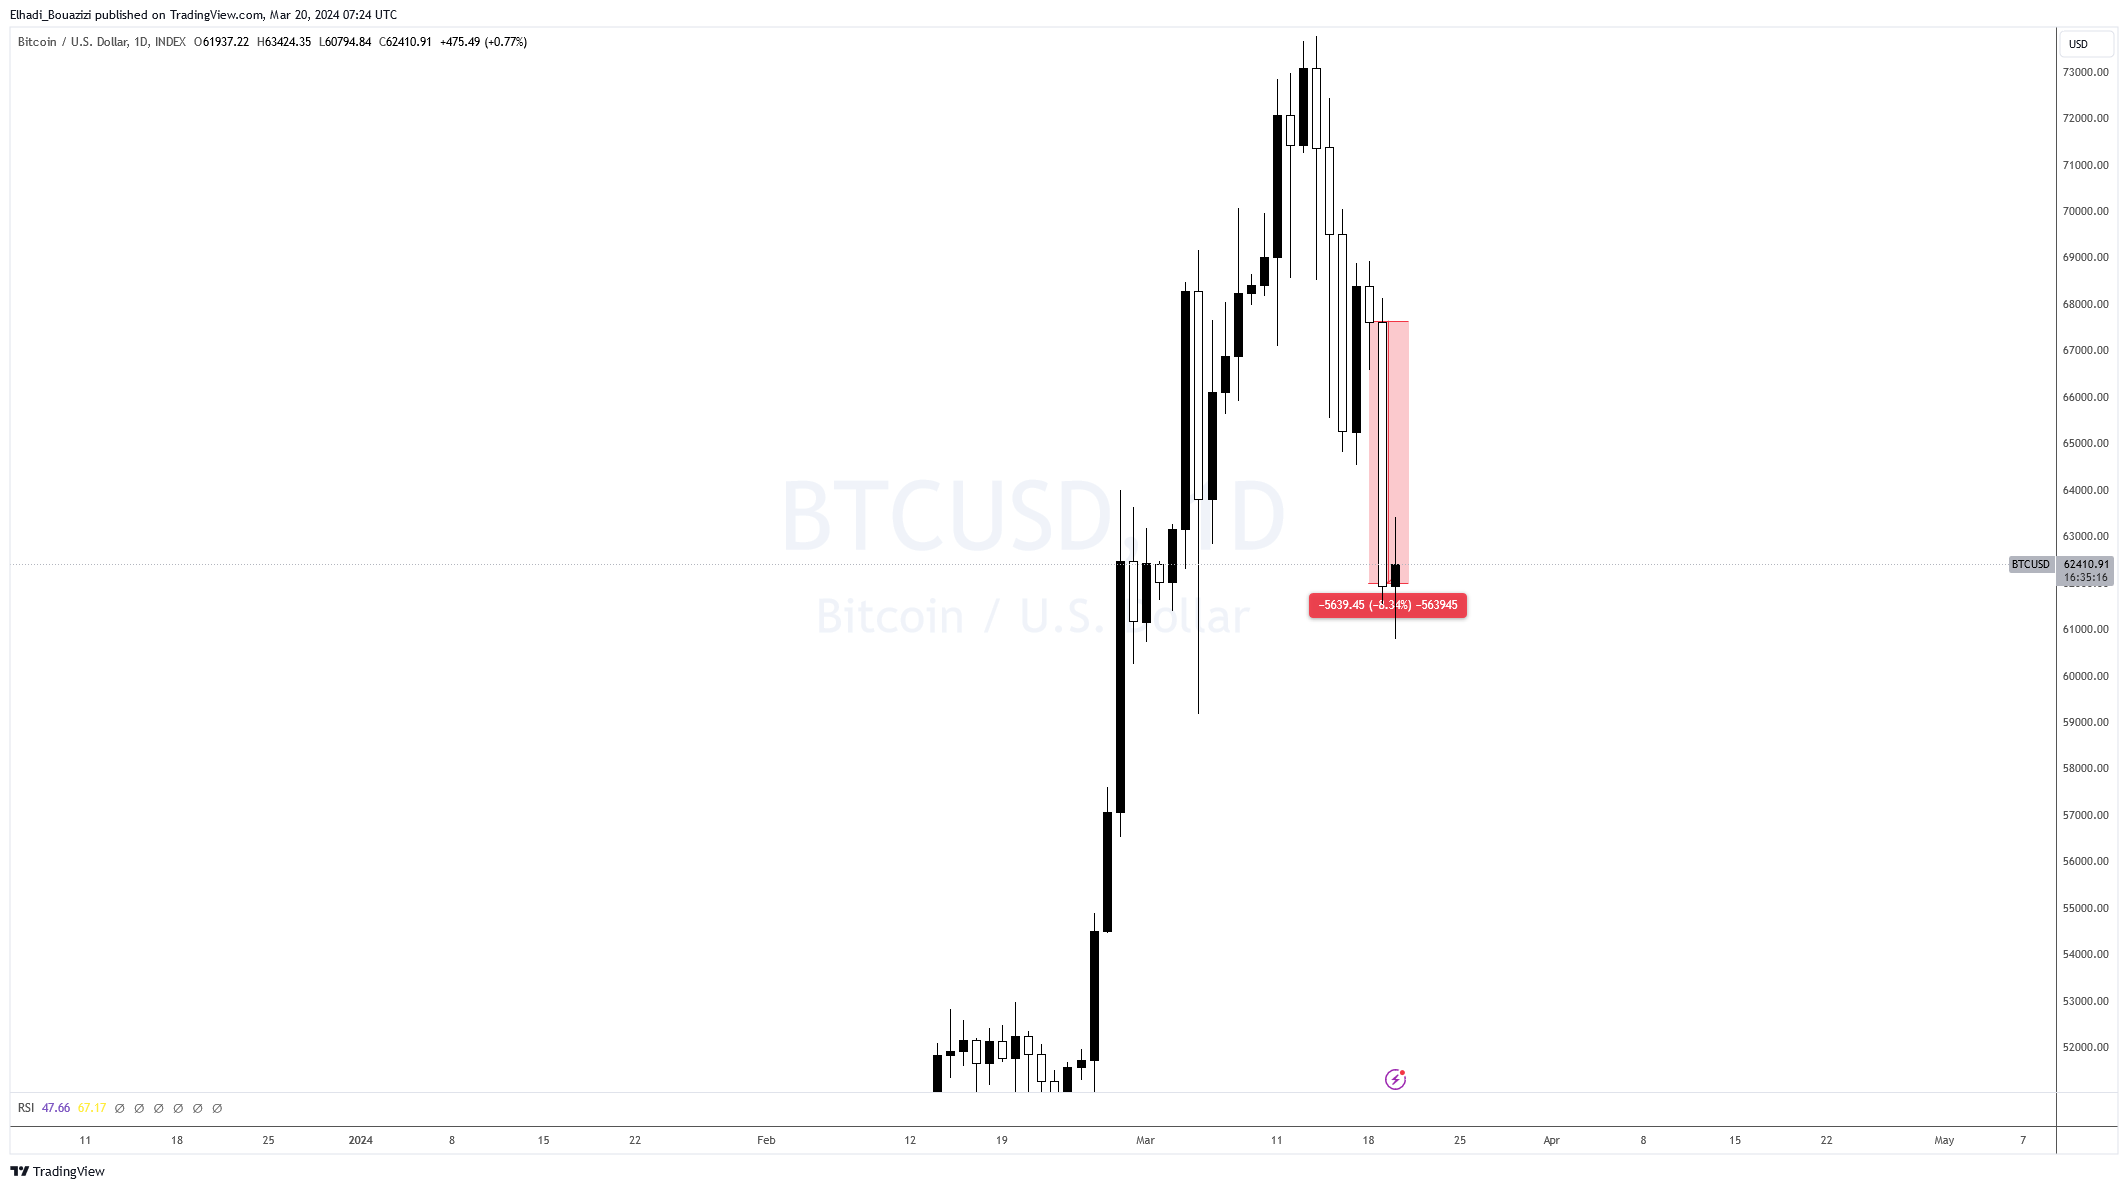 Bitcoin BTC daily price chart Source: tradingview